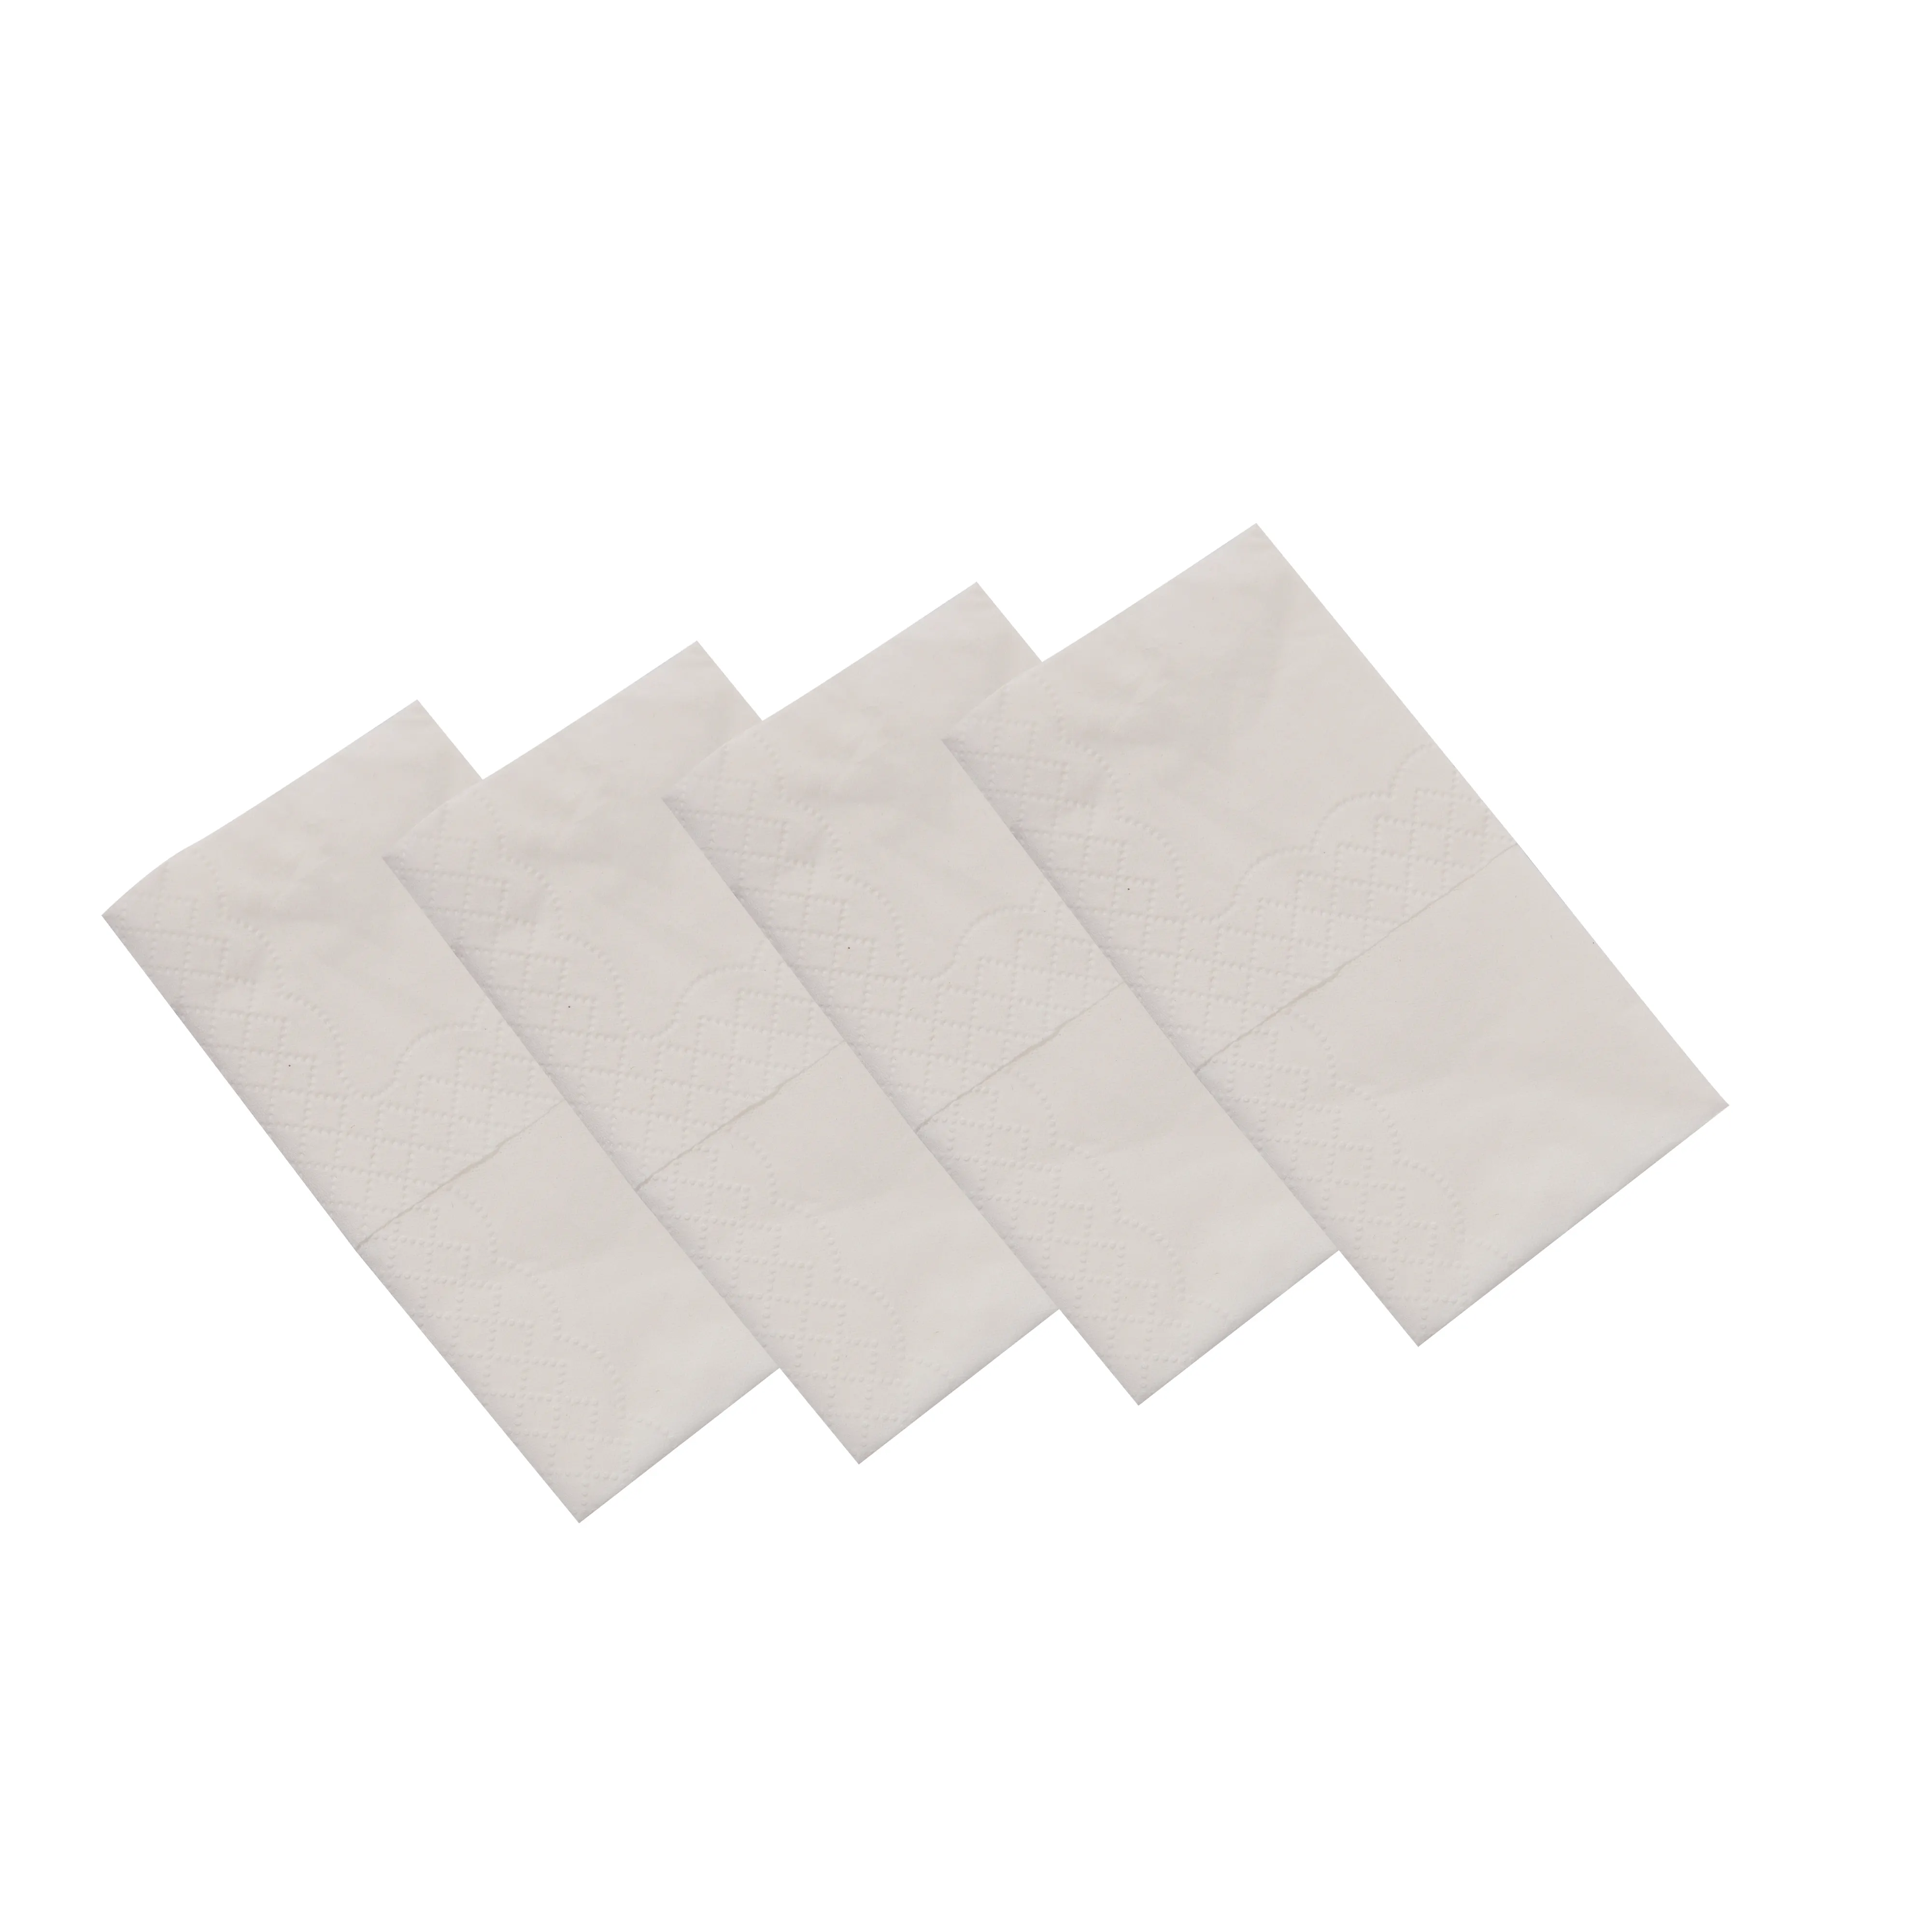 Pañuelo facial de bolsillo Mini de 2 capas blanco virgen personalizado de alta calidad